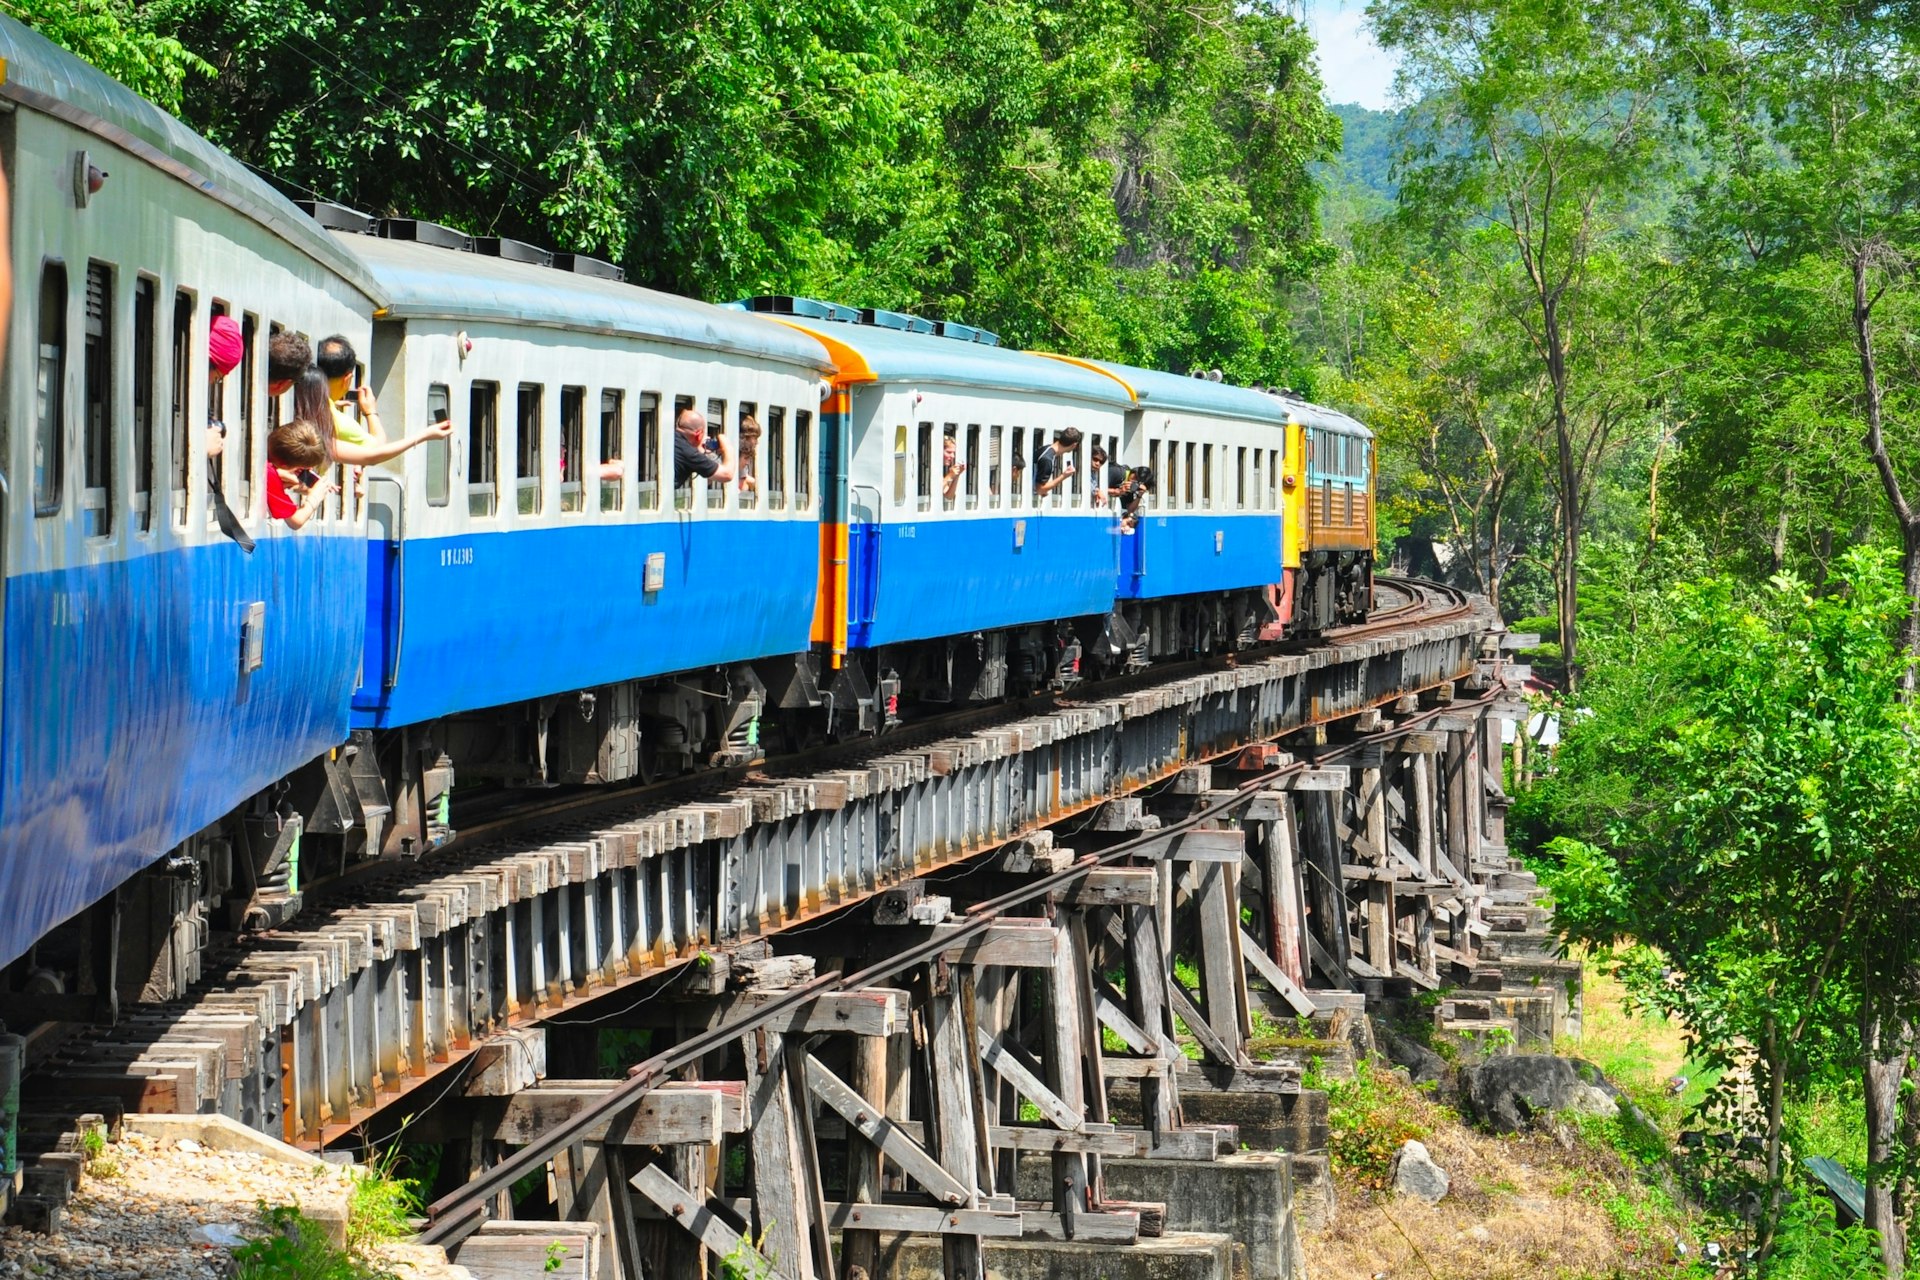 A train goes through the Thailand countryside